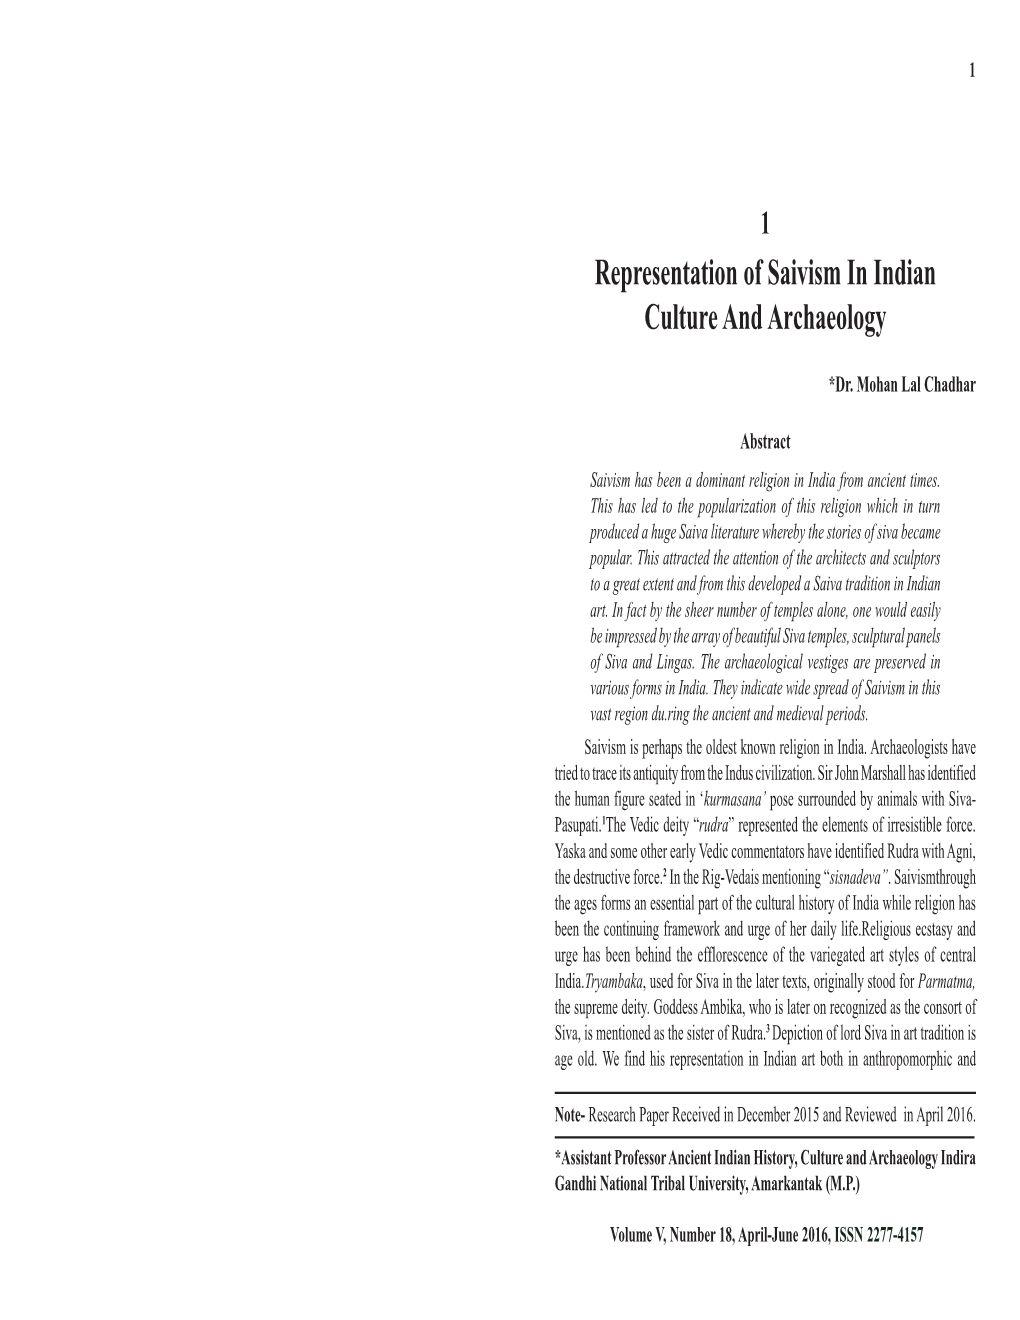 Journal of Historical and Archaeological Research, CIJHAR Volume V, Number 18, April-June 2016, ISSN 2277-4157 Dr